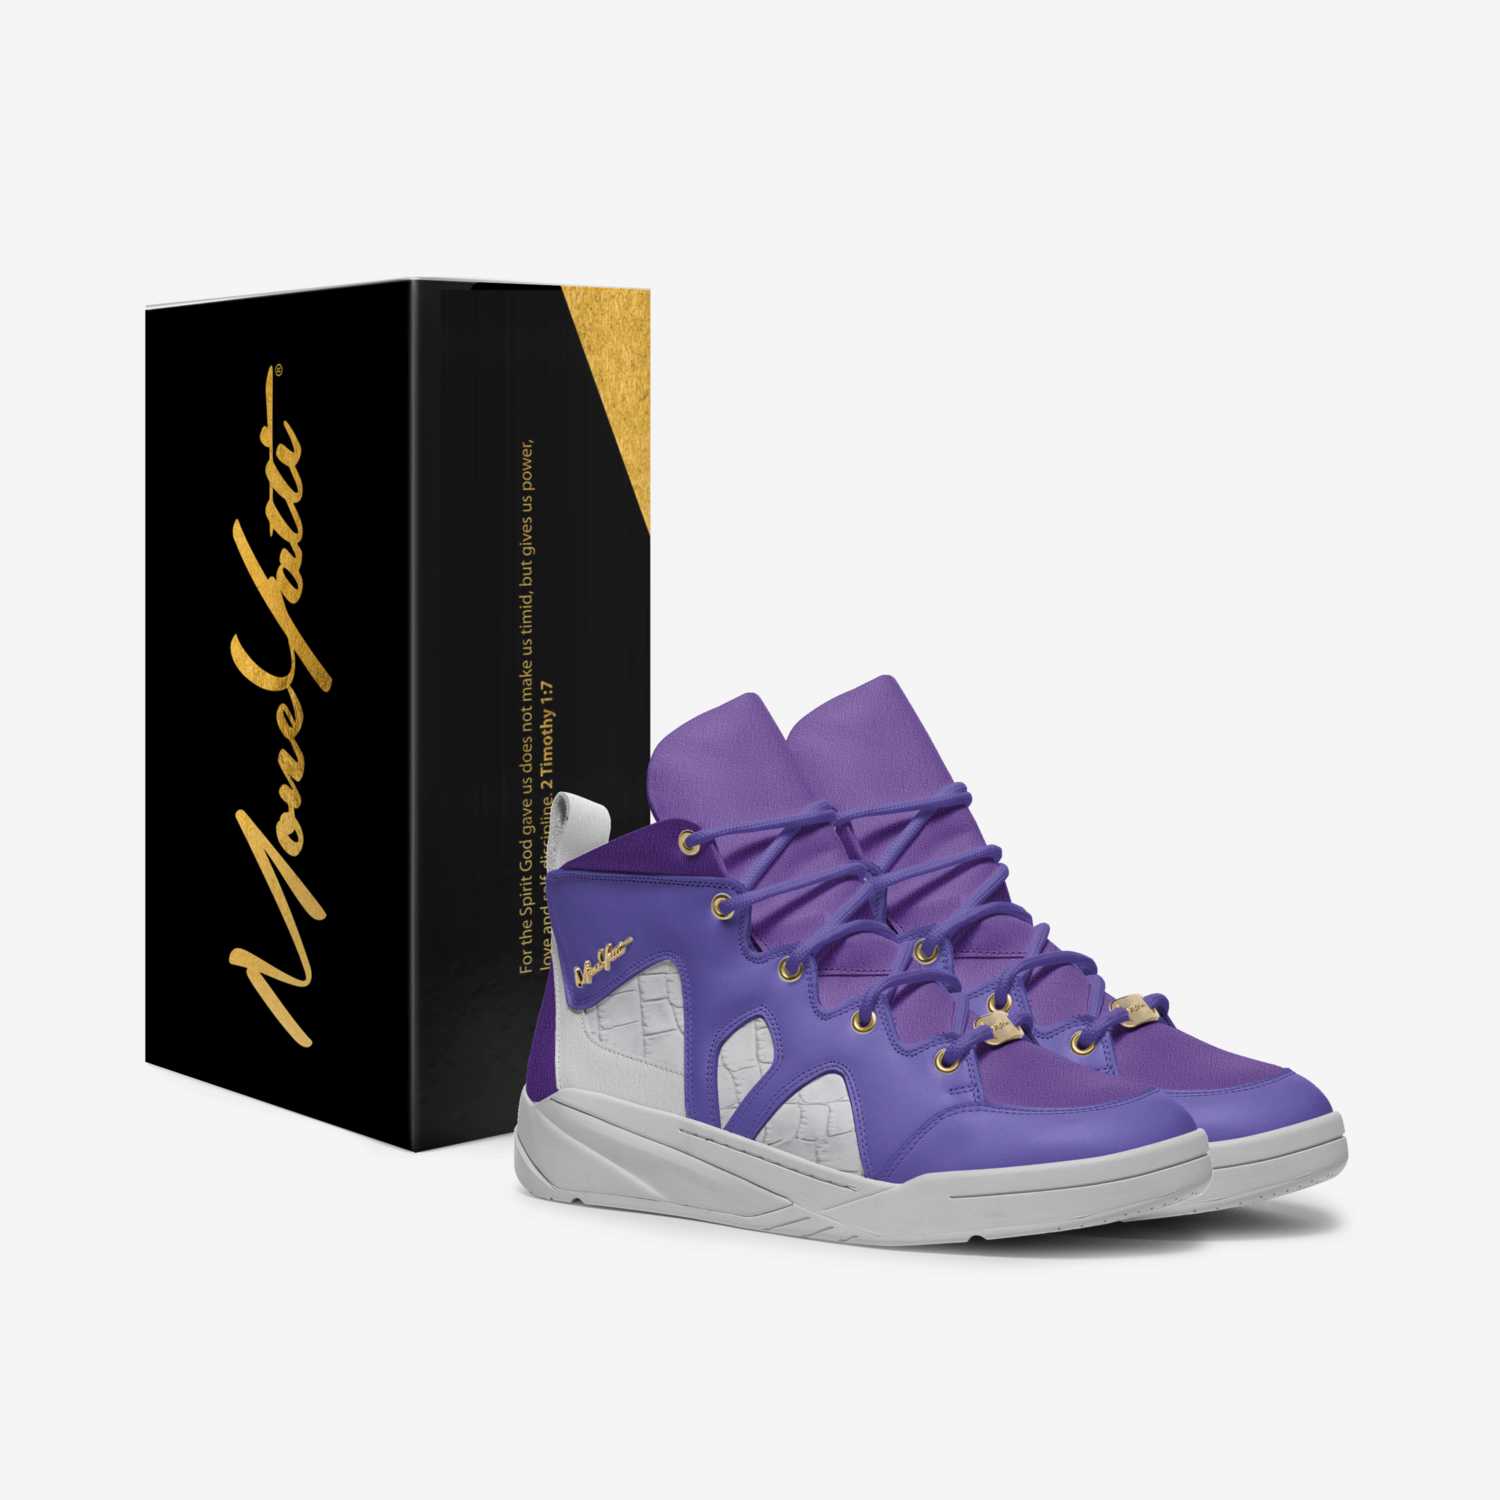 MONEYATTI TAKE OFF 016 custom made in Italy shoes by Moneyatti Brand | Box view